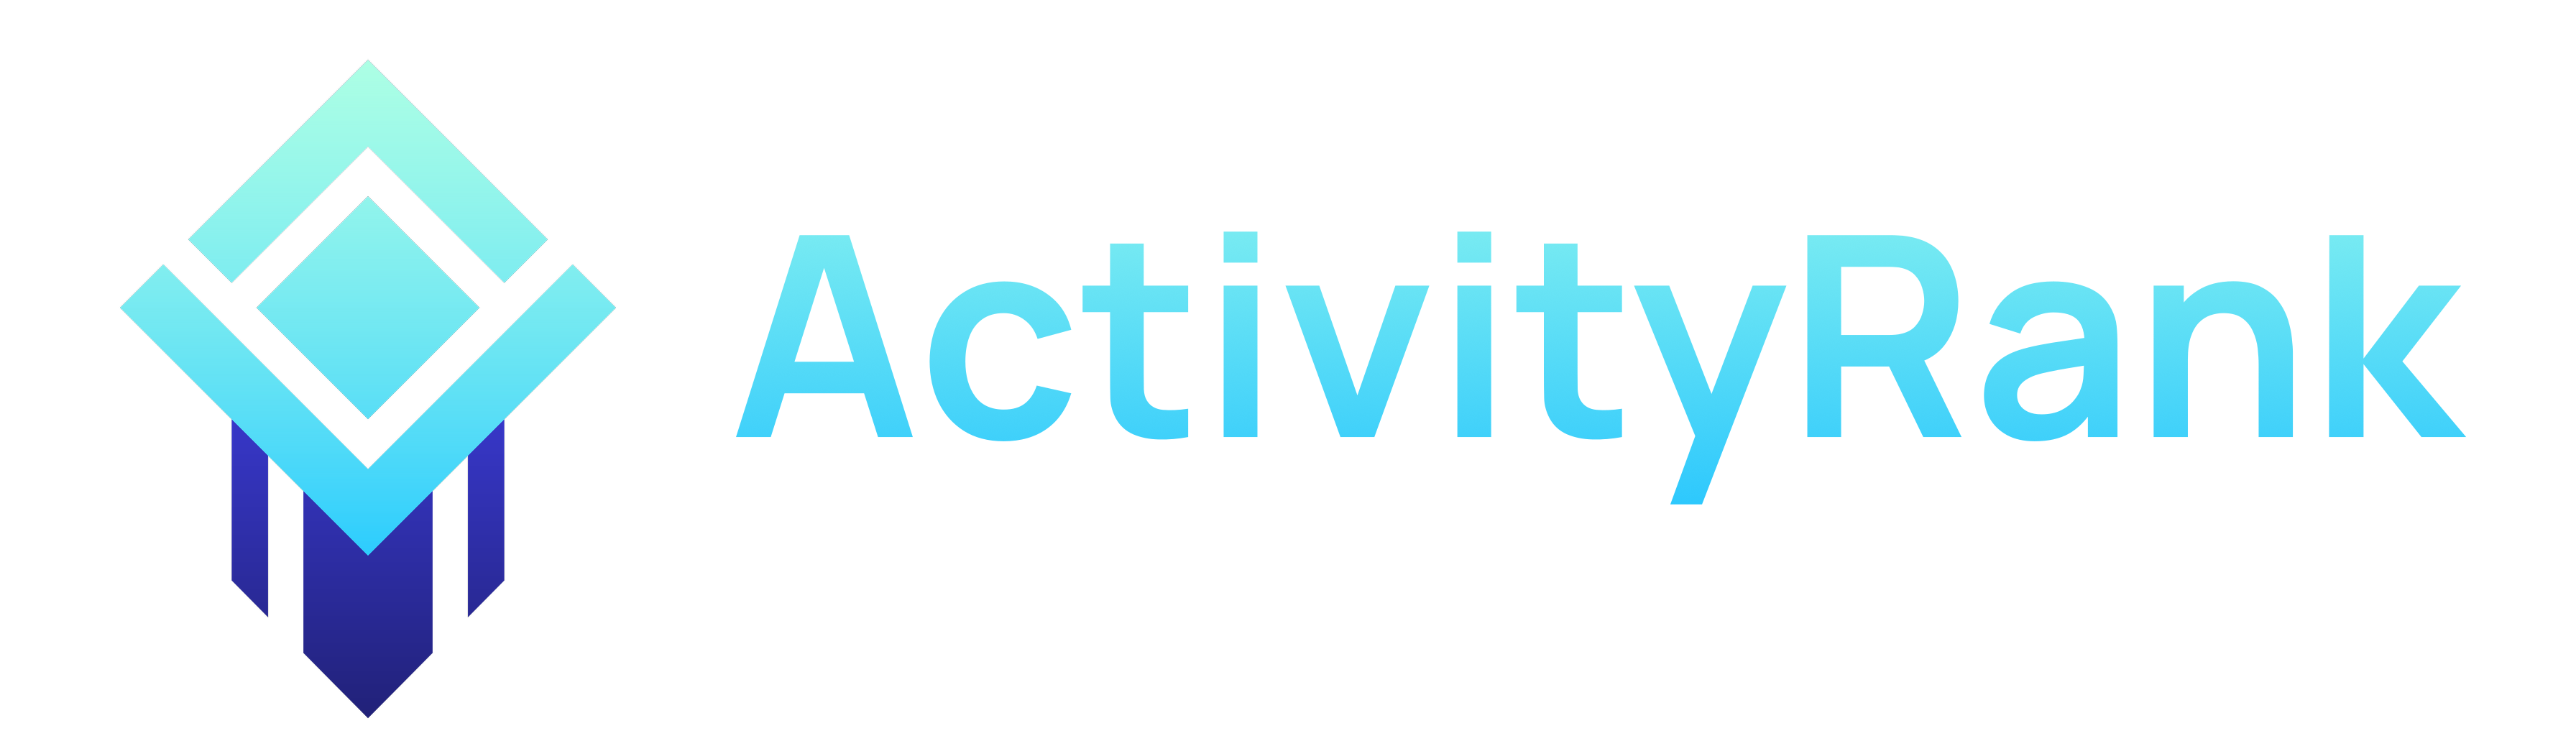 ActivityRank Wordmark